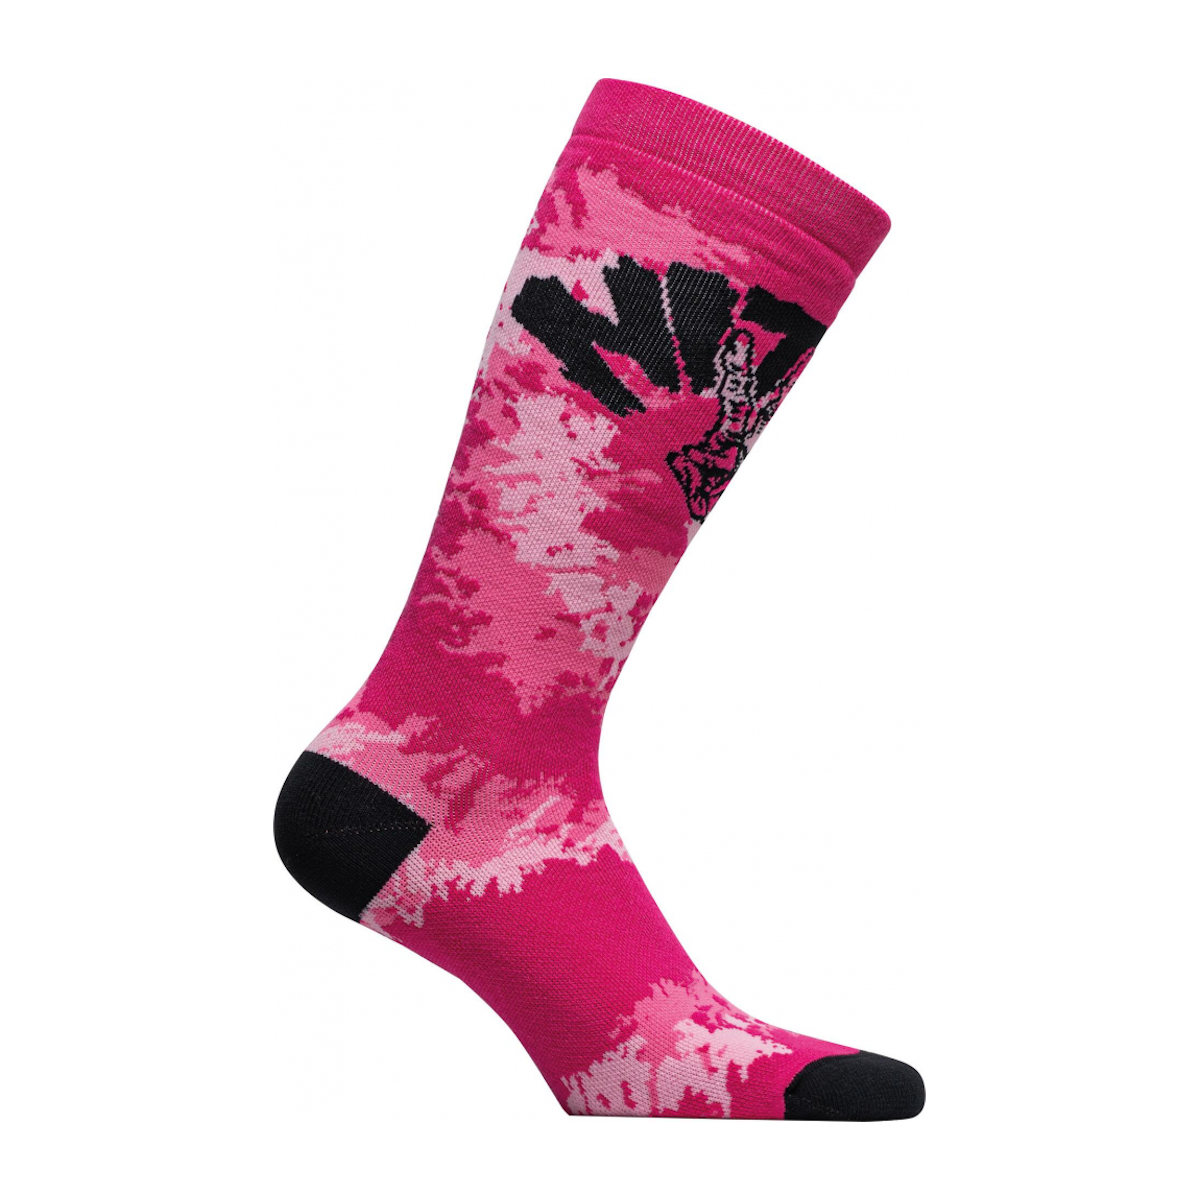 NITRO CLOUD 5 KIDS socks - black/pink